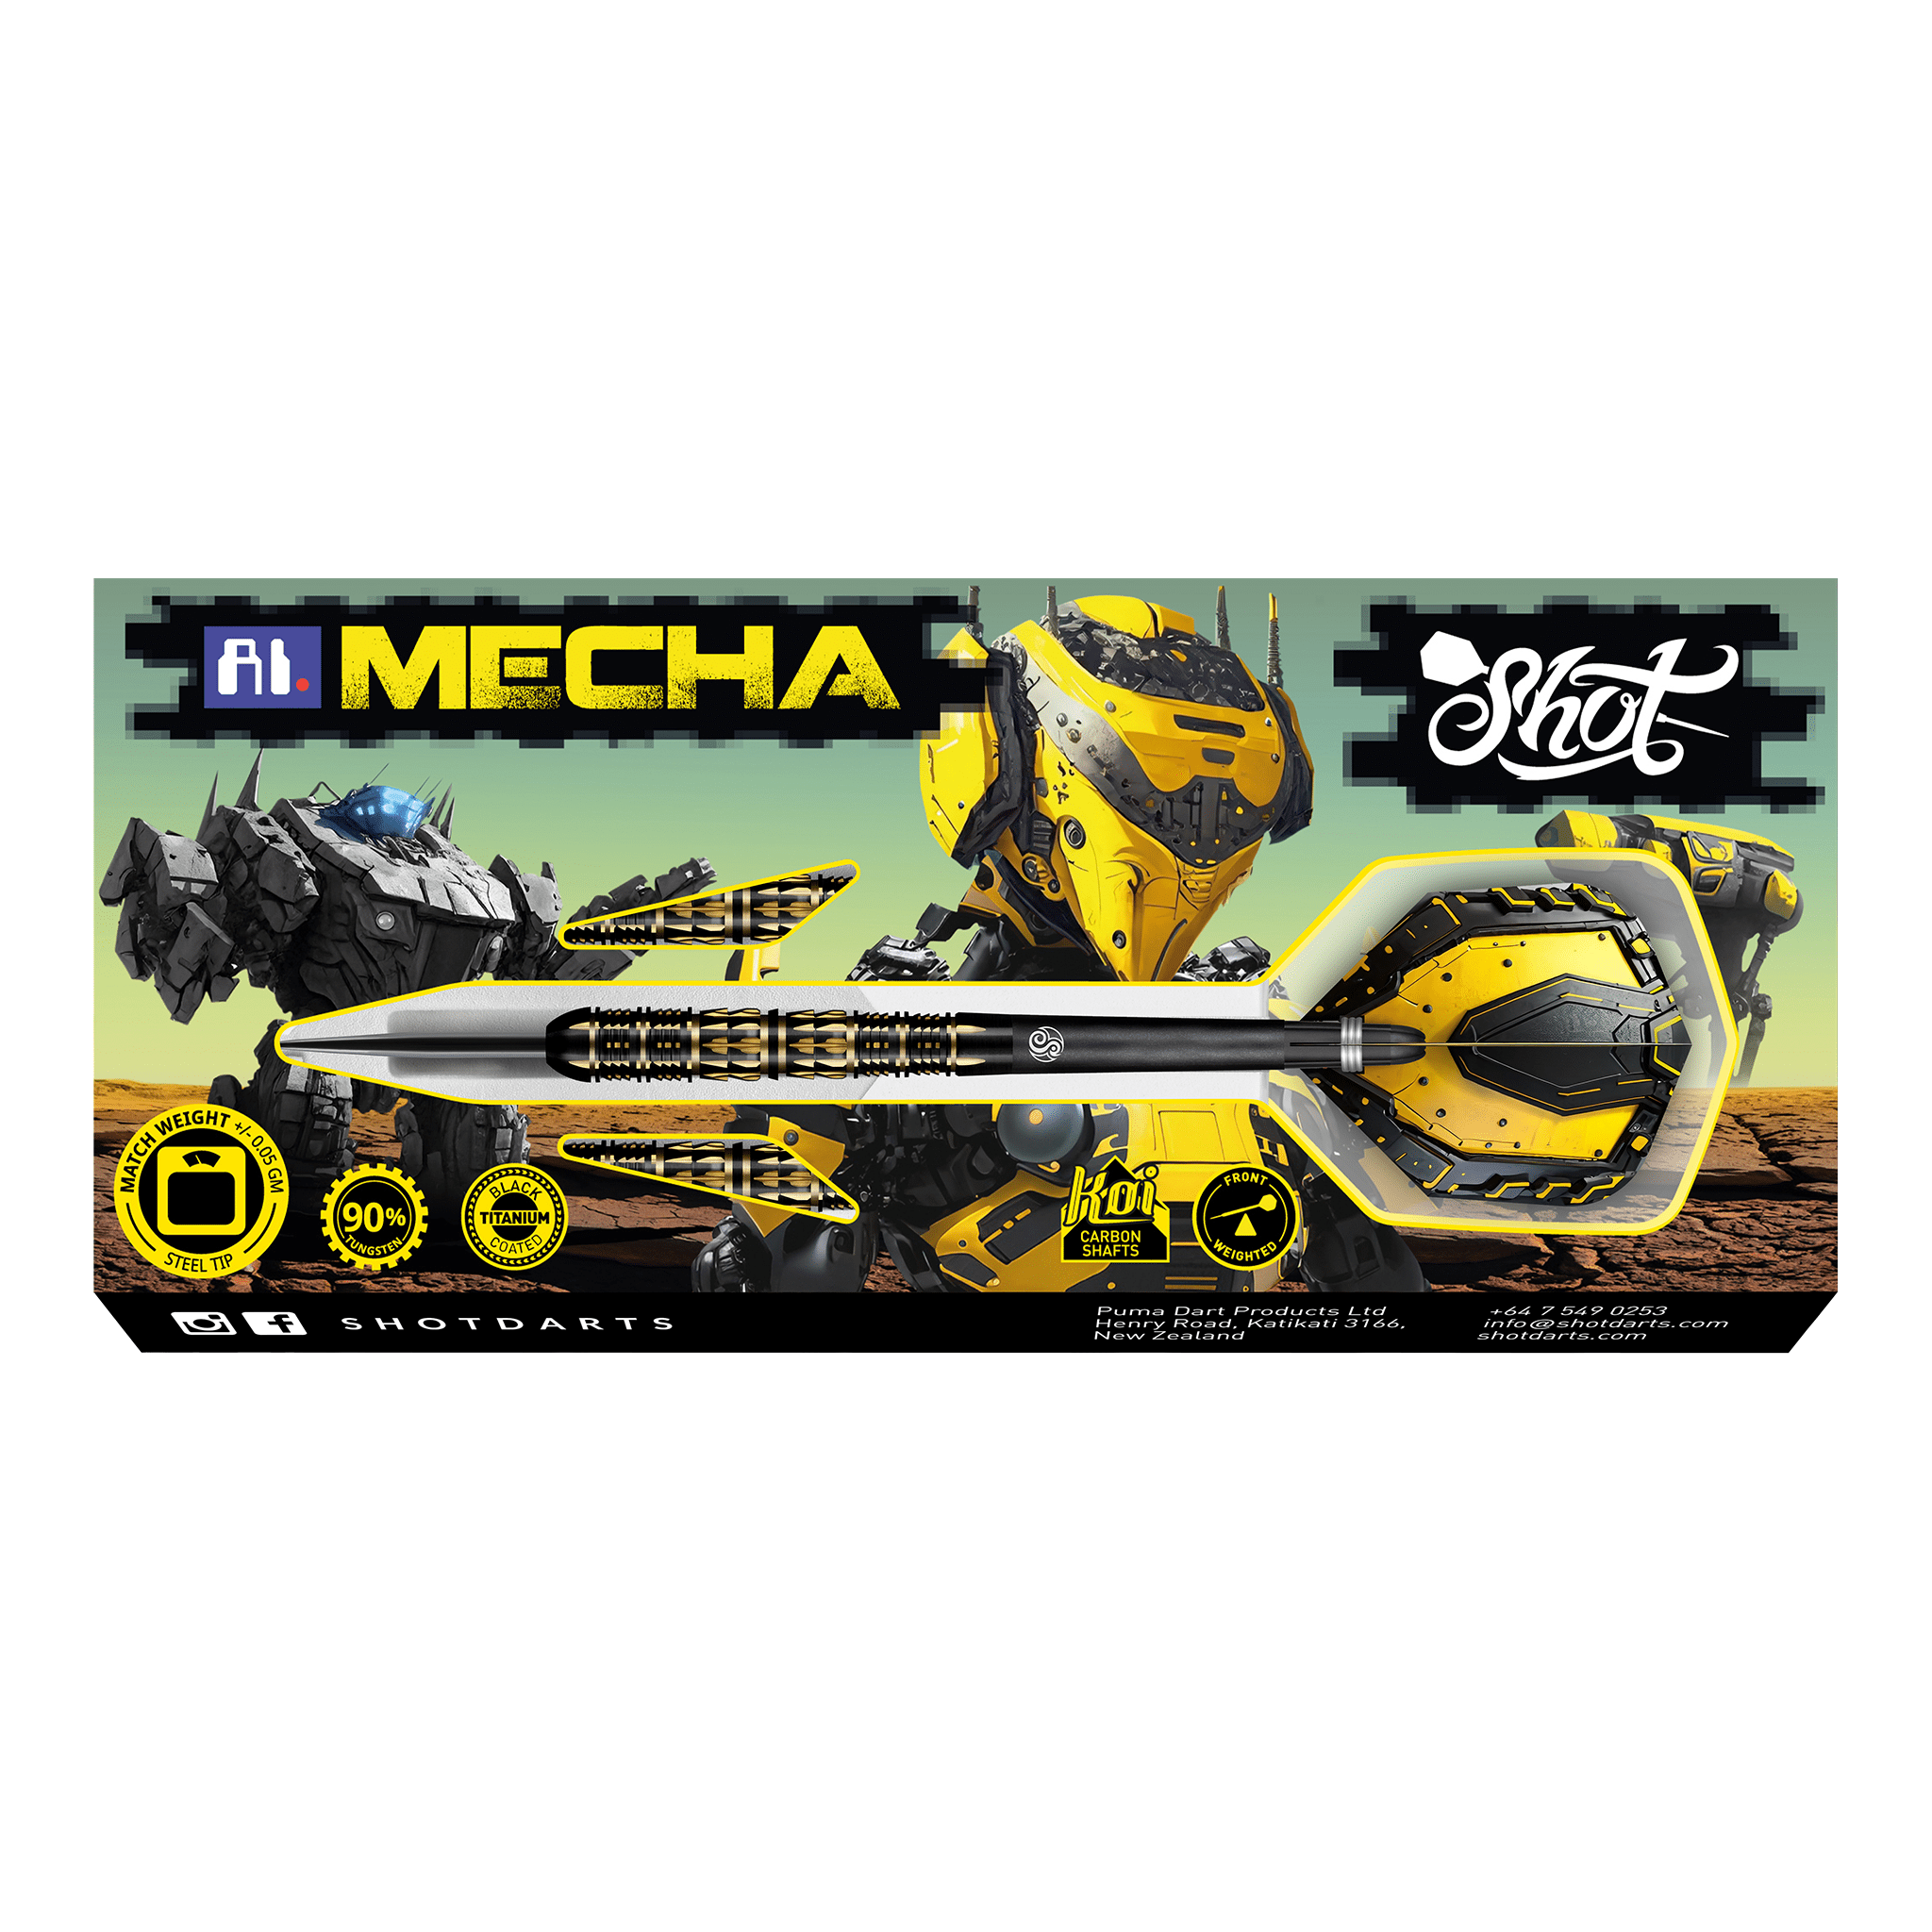 Shot AI Mecha - 90% Tungsten Steel Tip Darts Darts